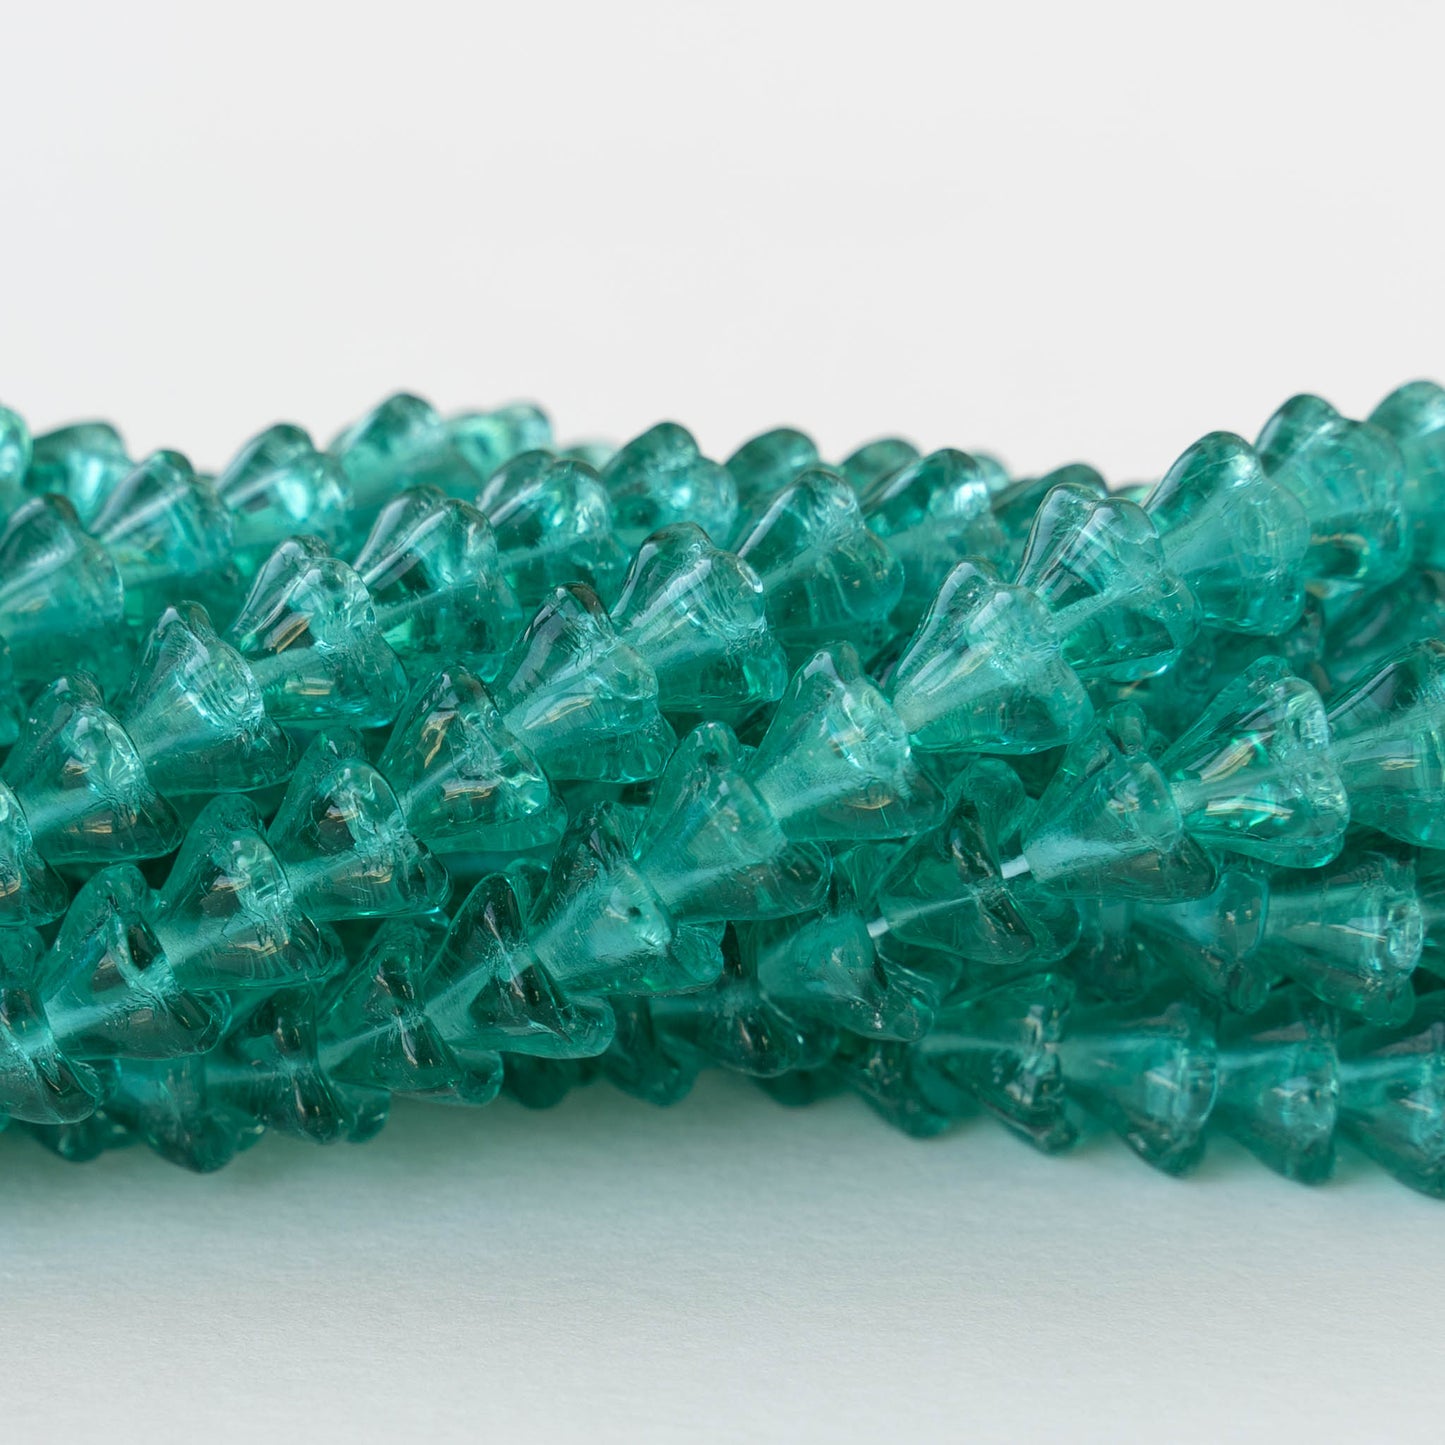 6x8mm Glass Flower Beads - Teal - 30